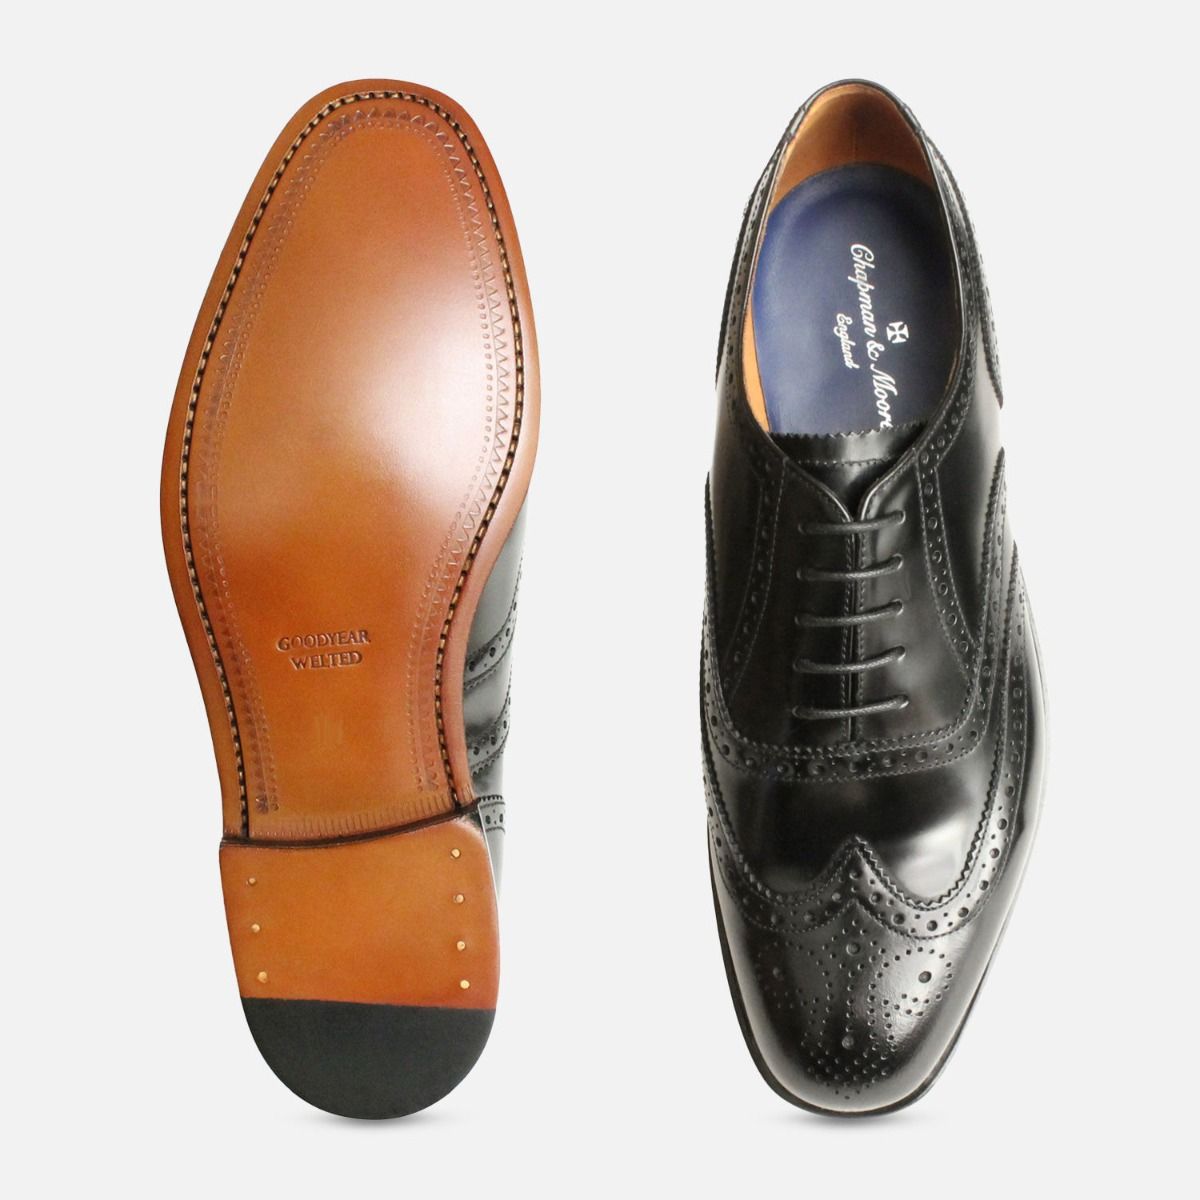 Wingcap Black Oxford Leather Sole Chapman Shoes